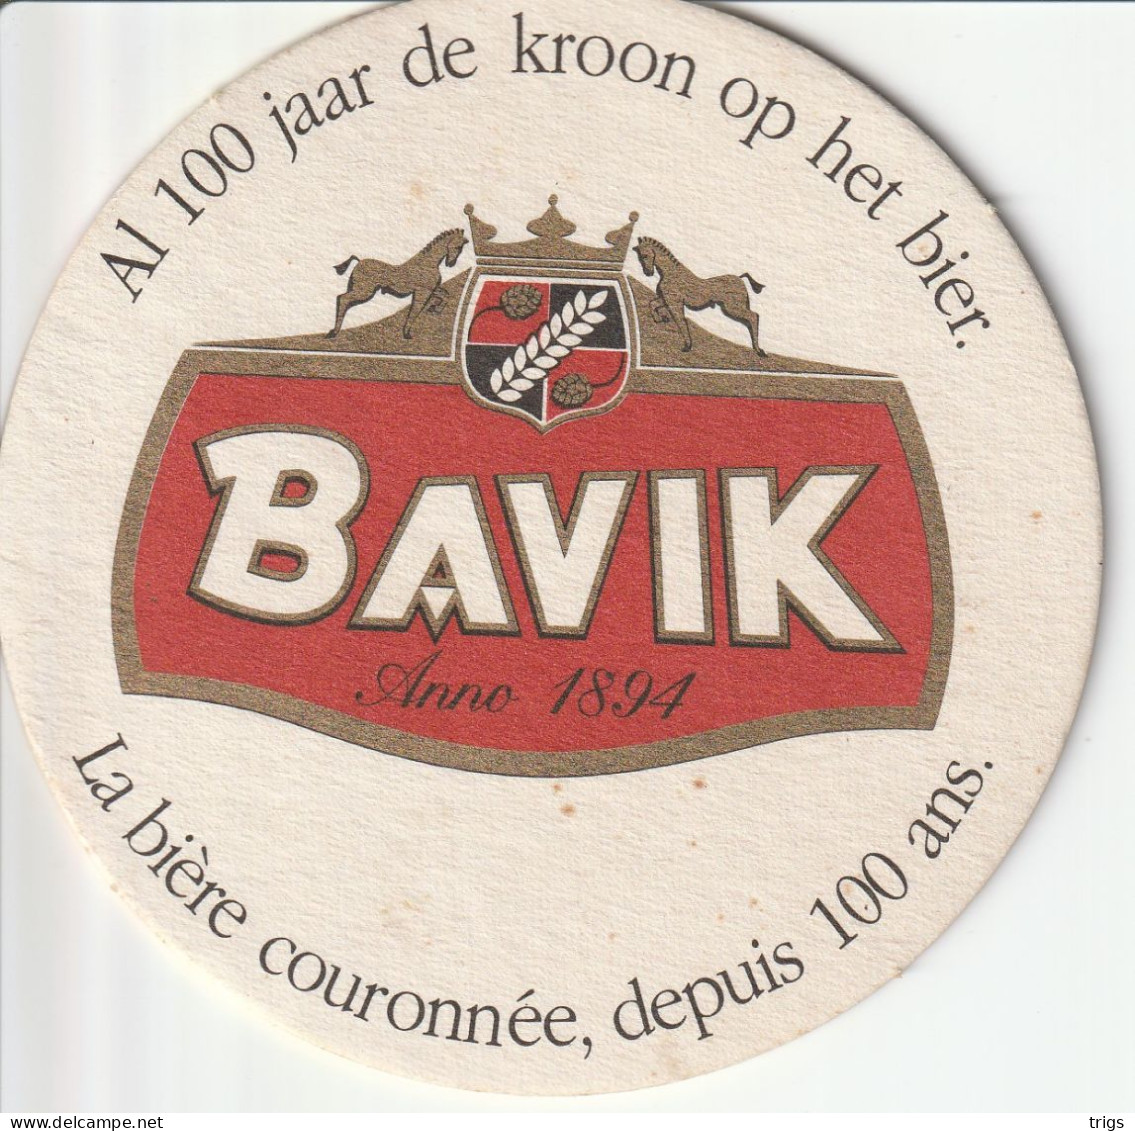 Bavik - Portavasos